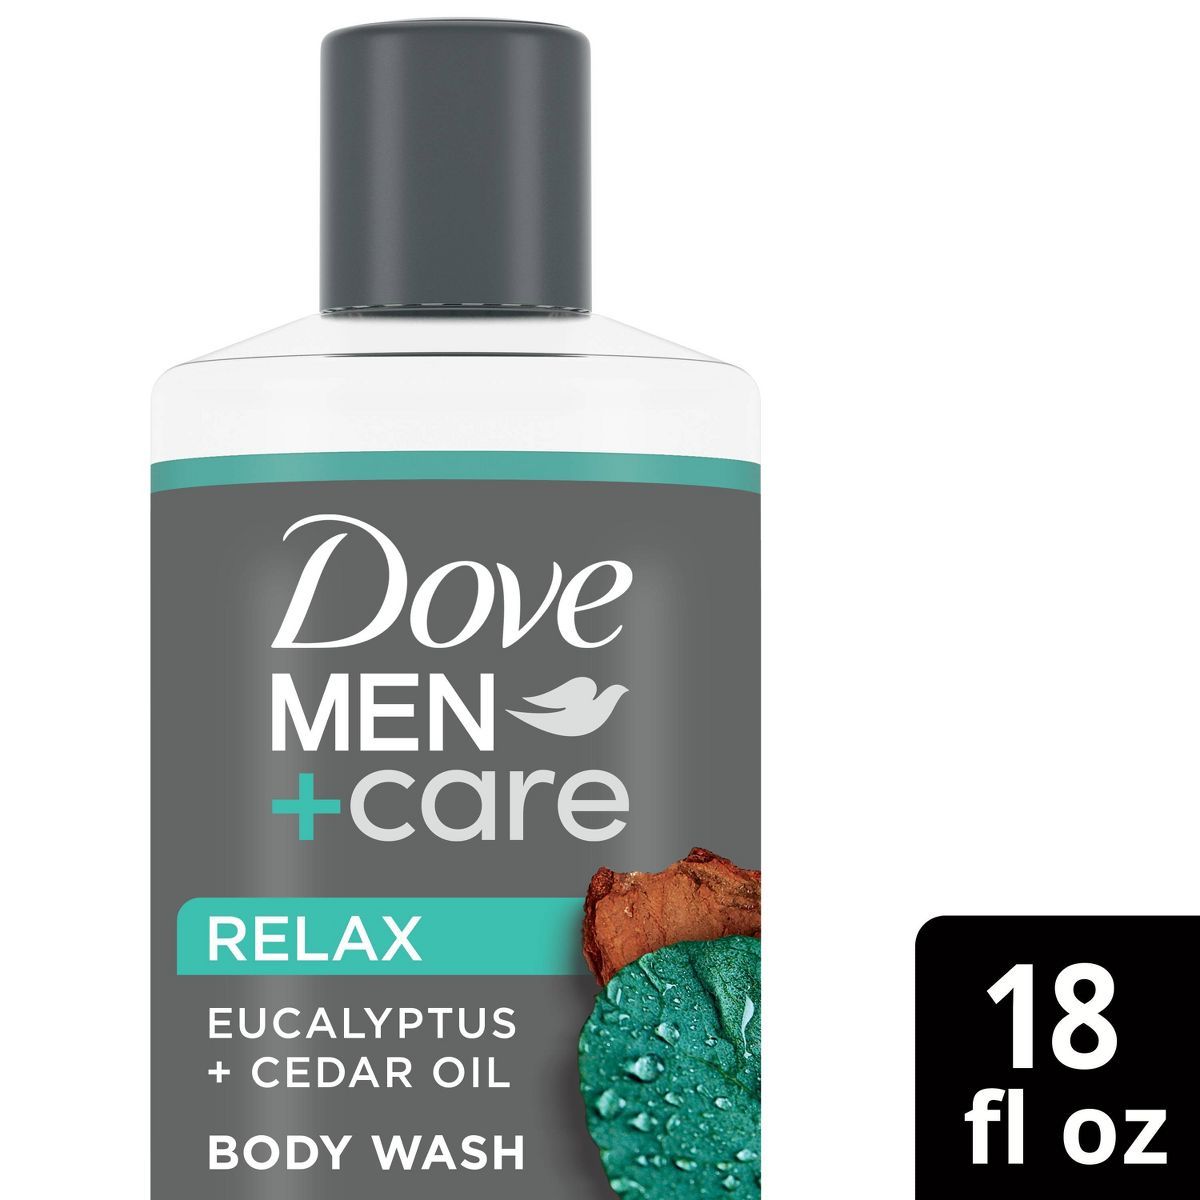 Dove Men+Care Relaxing Eucalyptus + Cedar Hydrating Body Wash Soap - 18 fl oz | Target